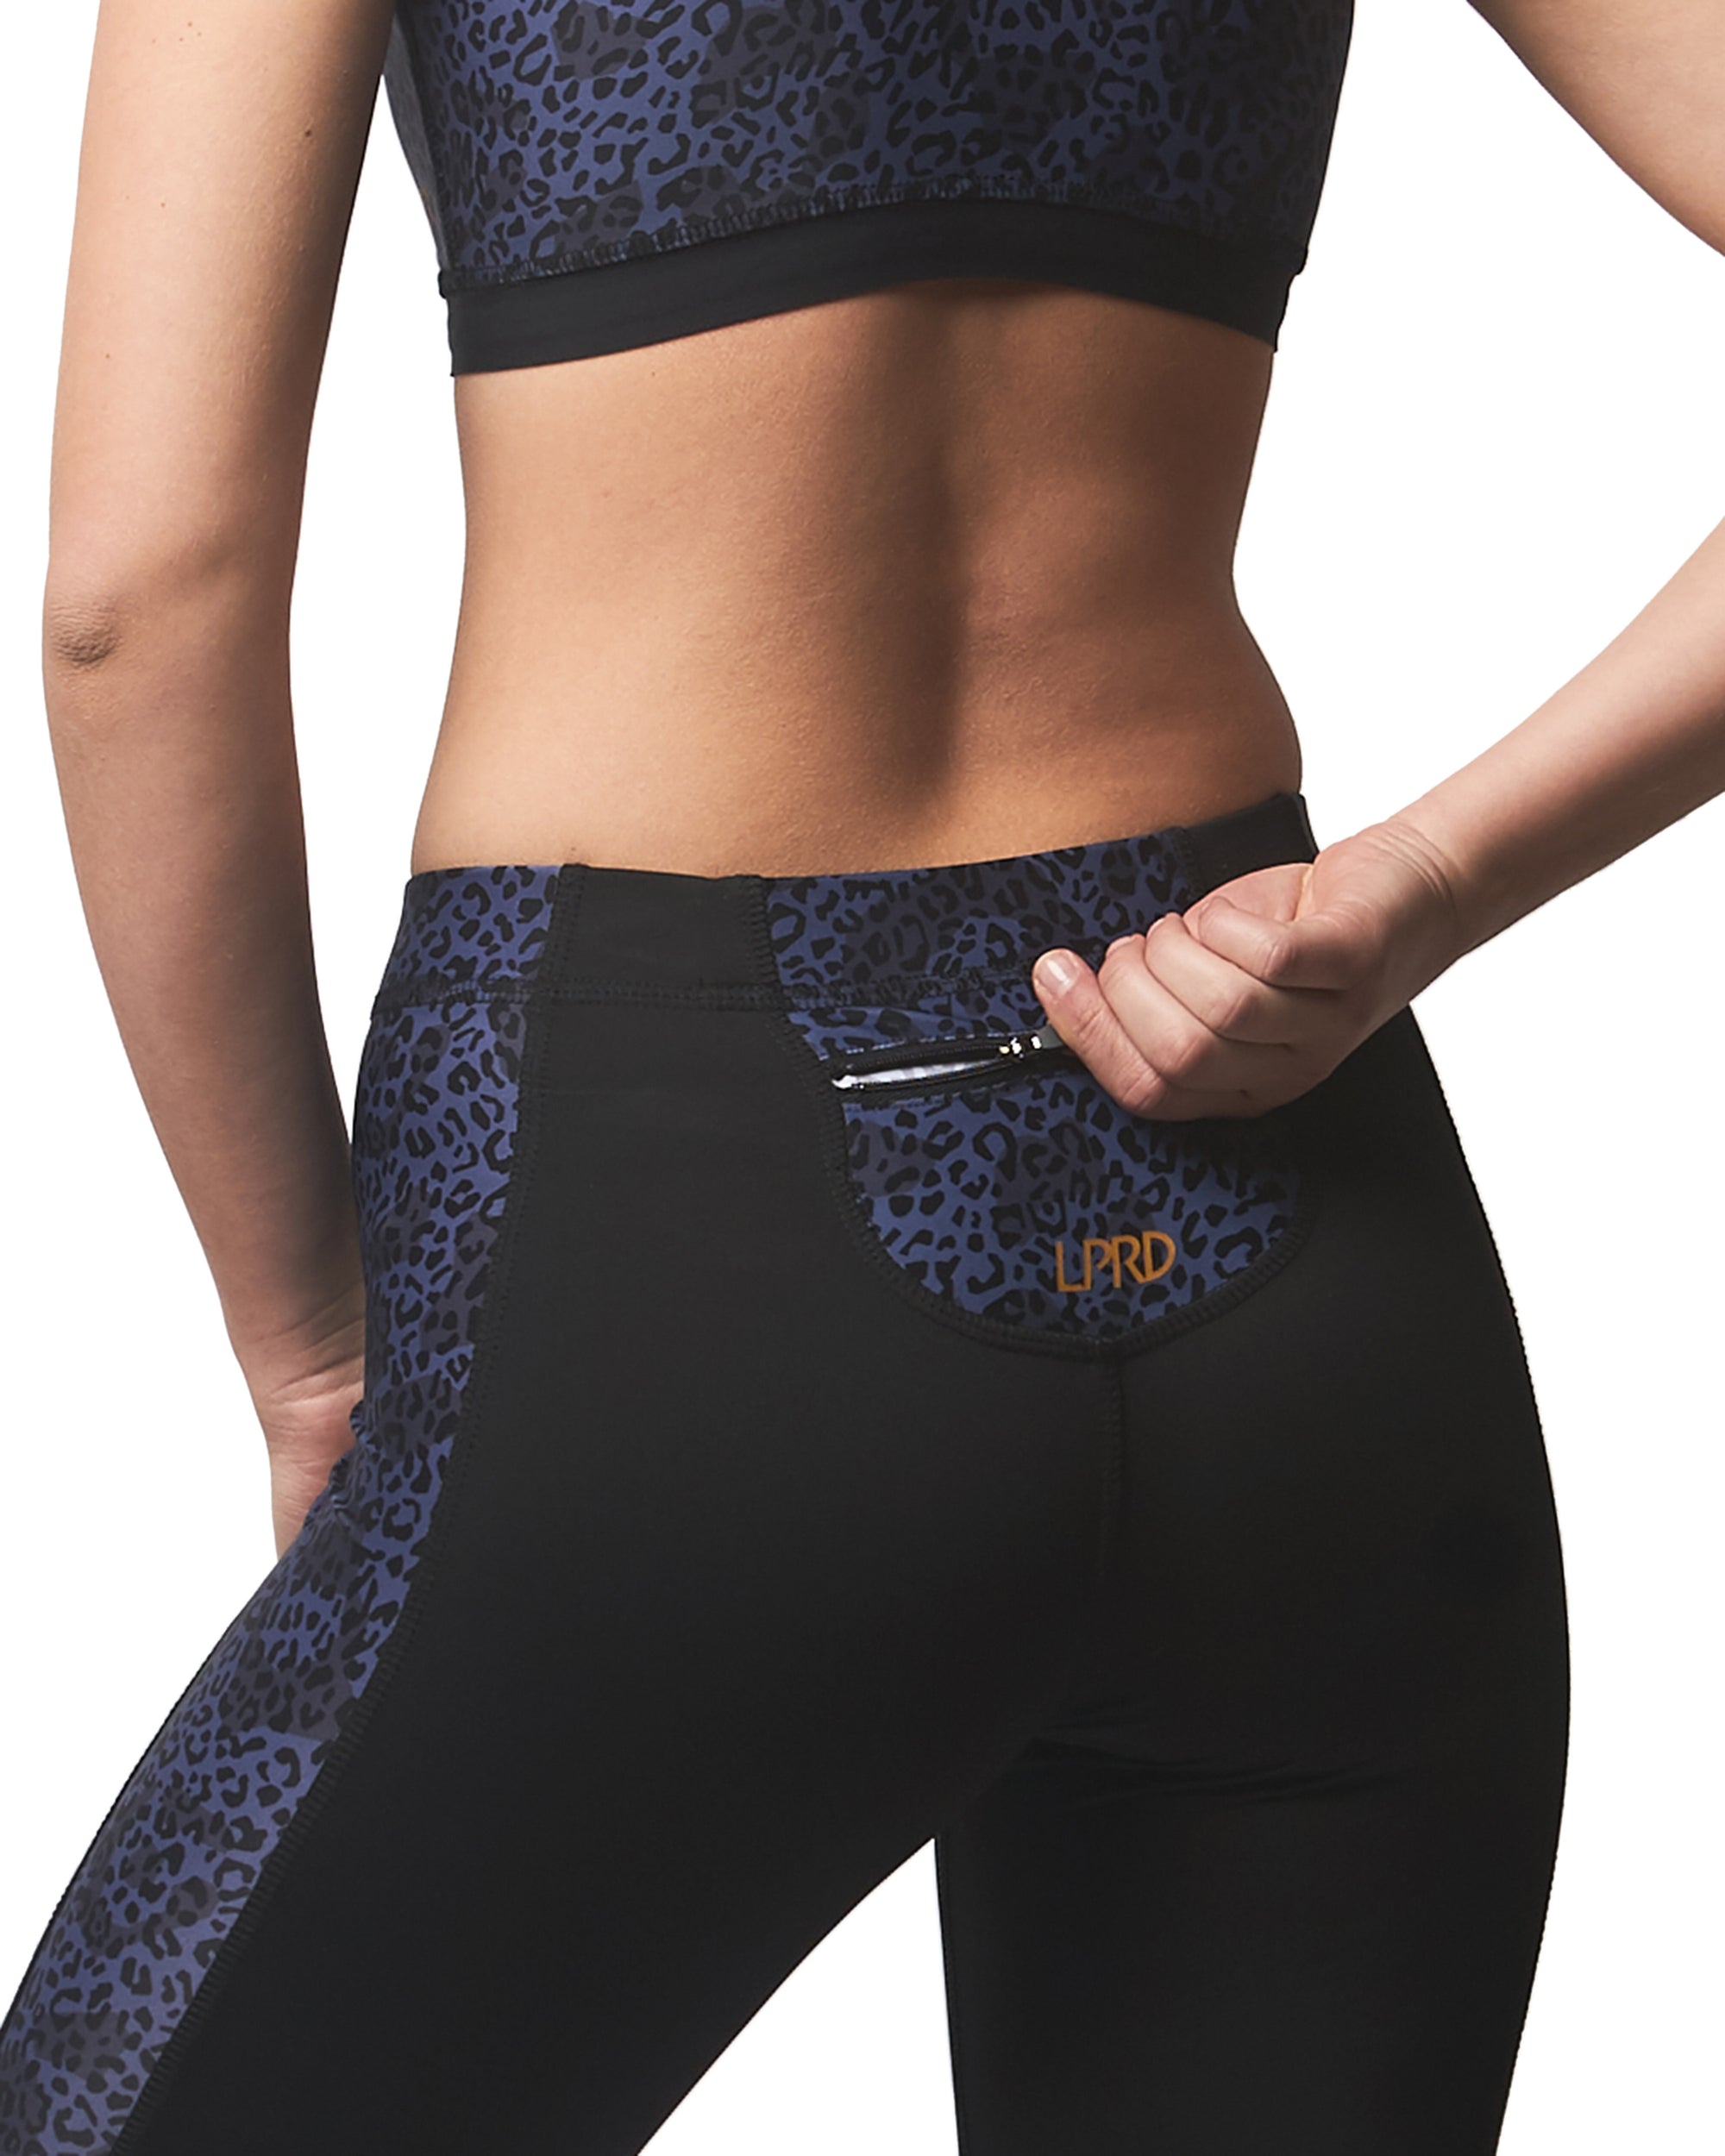 Workout leggings - Black and subtle navy blue leopard print